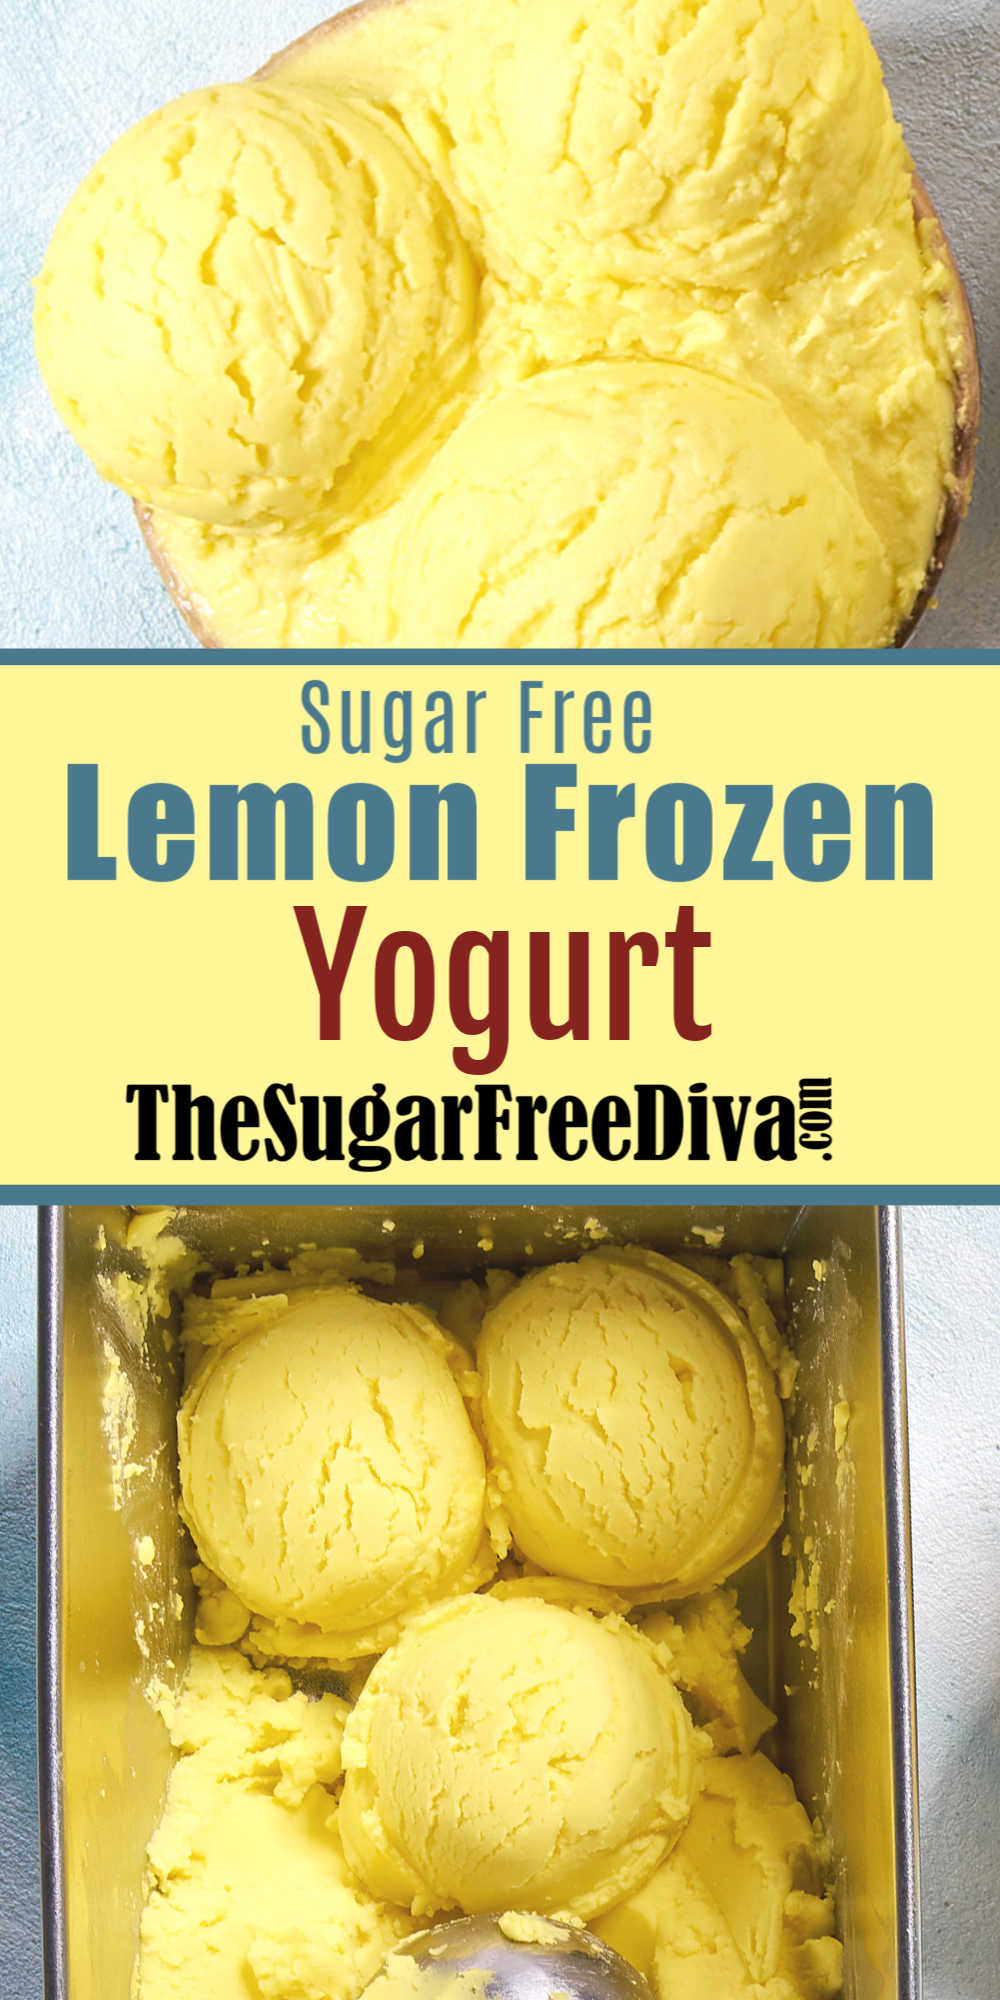 Sugar Free Lemon Frozen Yogurt